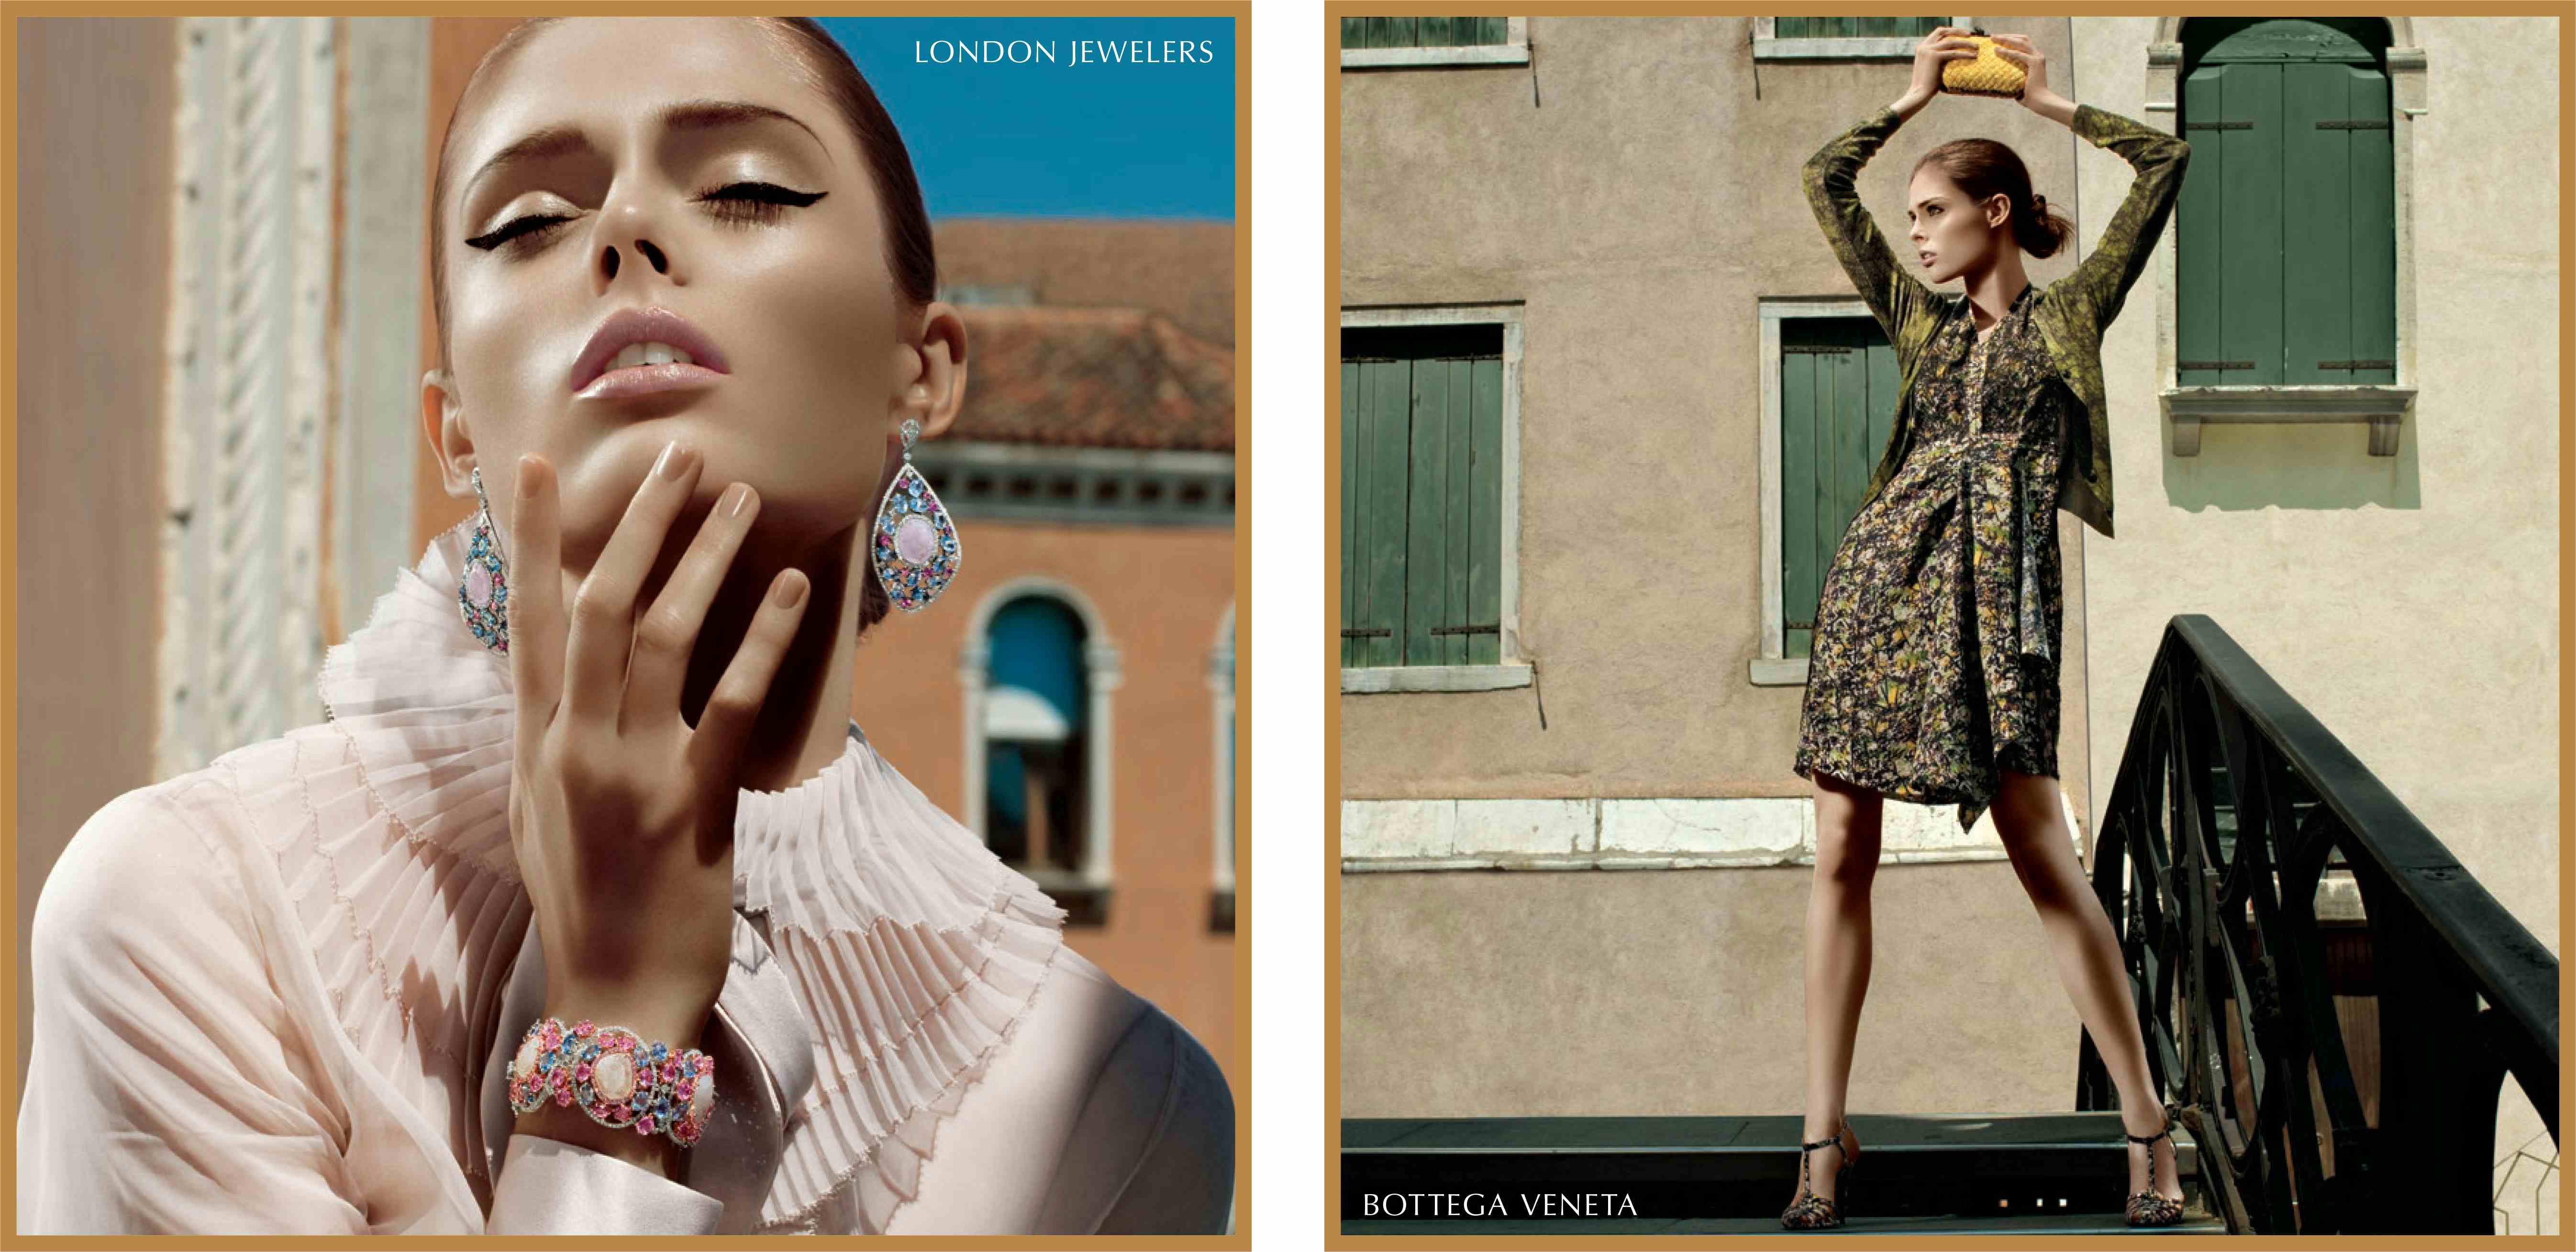 AMERICANA MANHASSET - Fall 2011
Photographer: Laspata & Decaro
Model: Coco Rocha
Stylist: Tara Mooser
Location: Venice - Italy